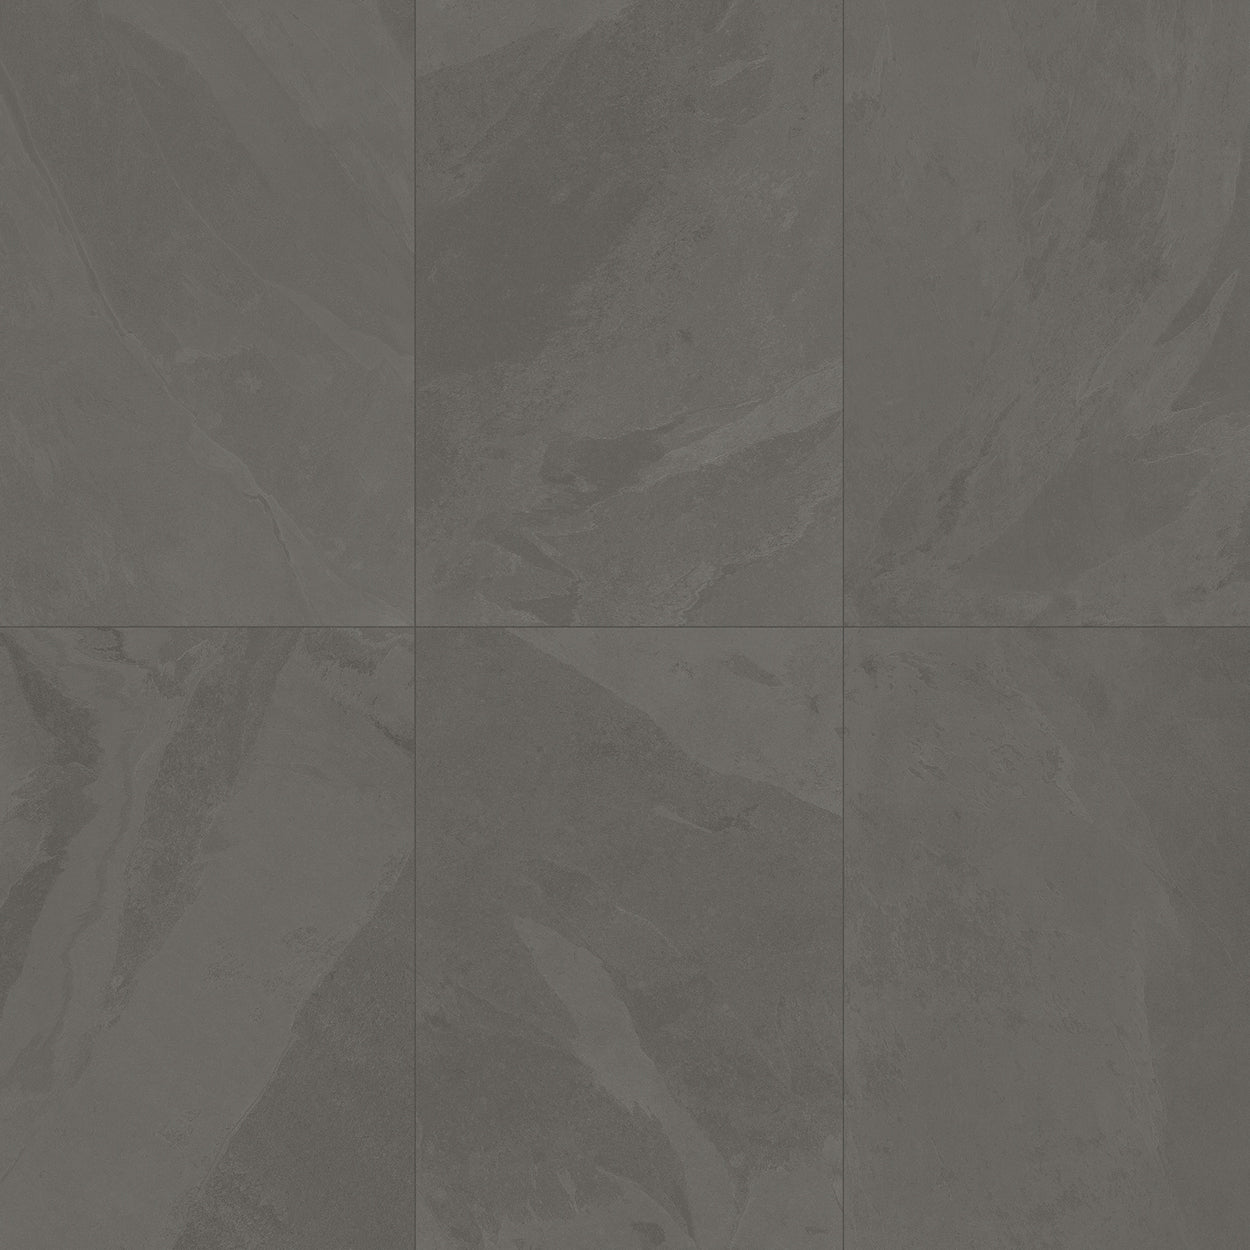 Brazilian elephant grey, wall tile, floor tile, porcelain tile